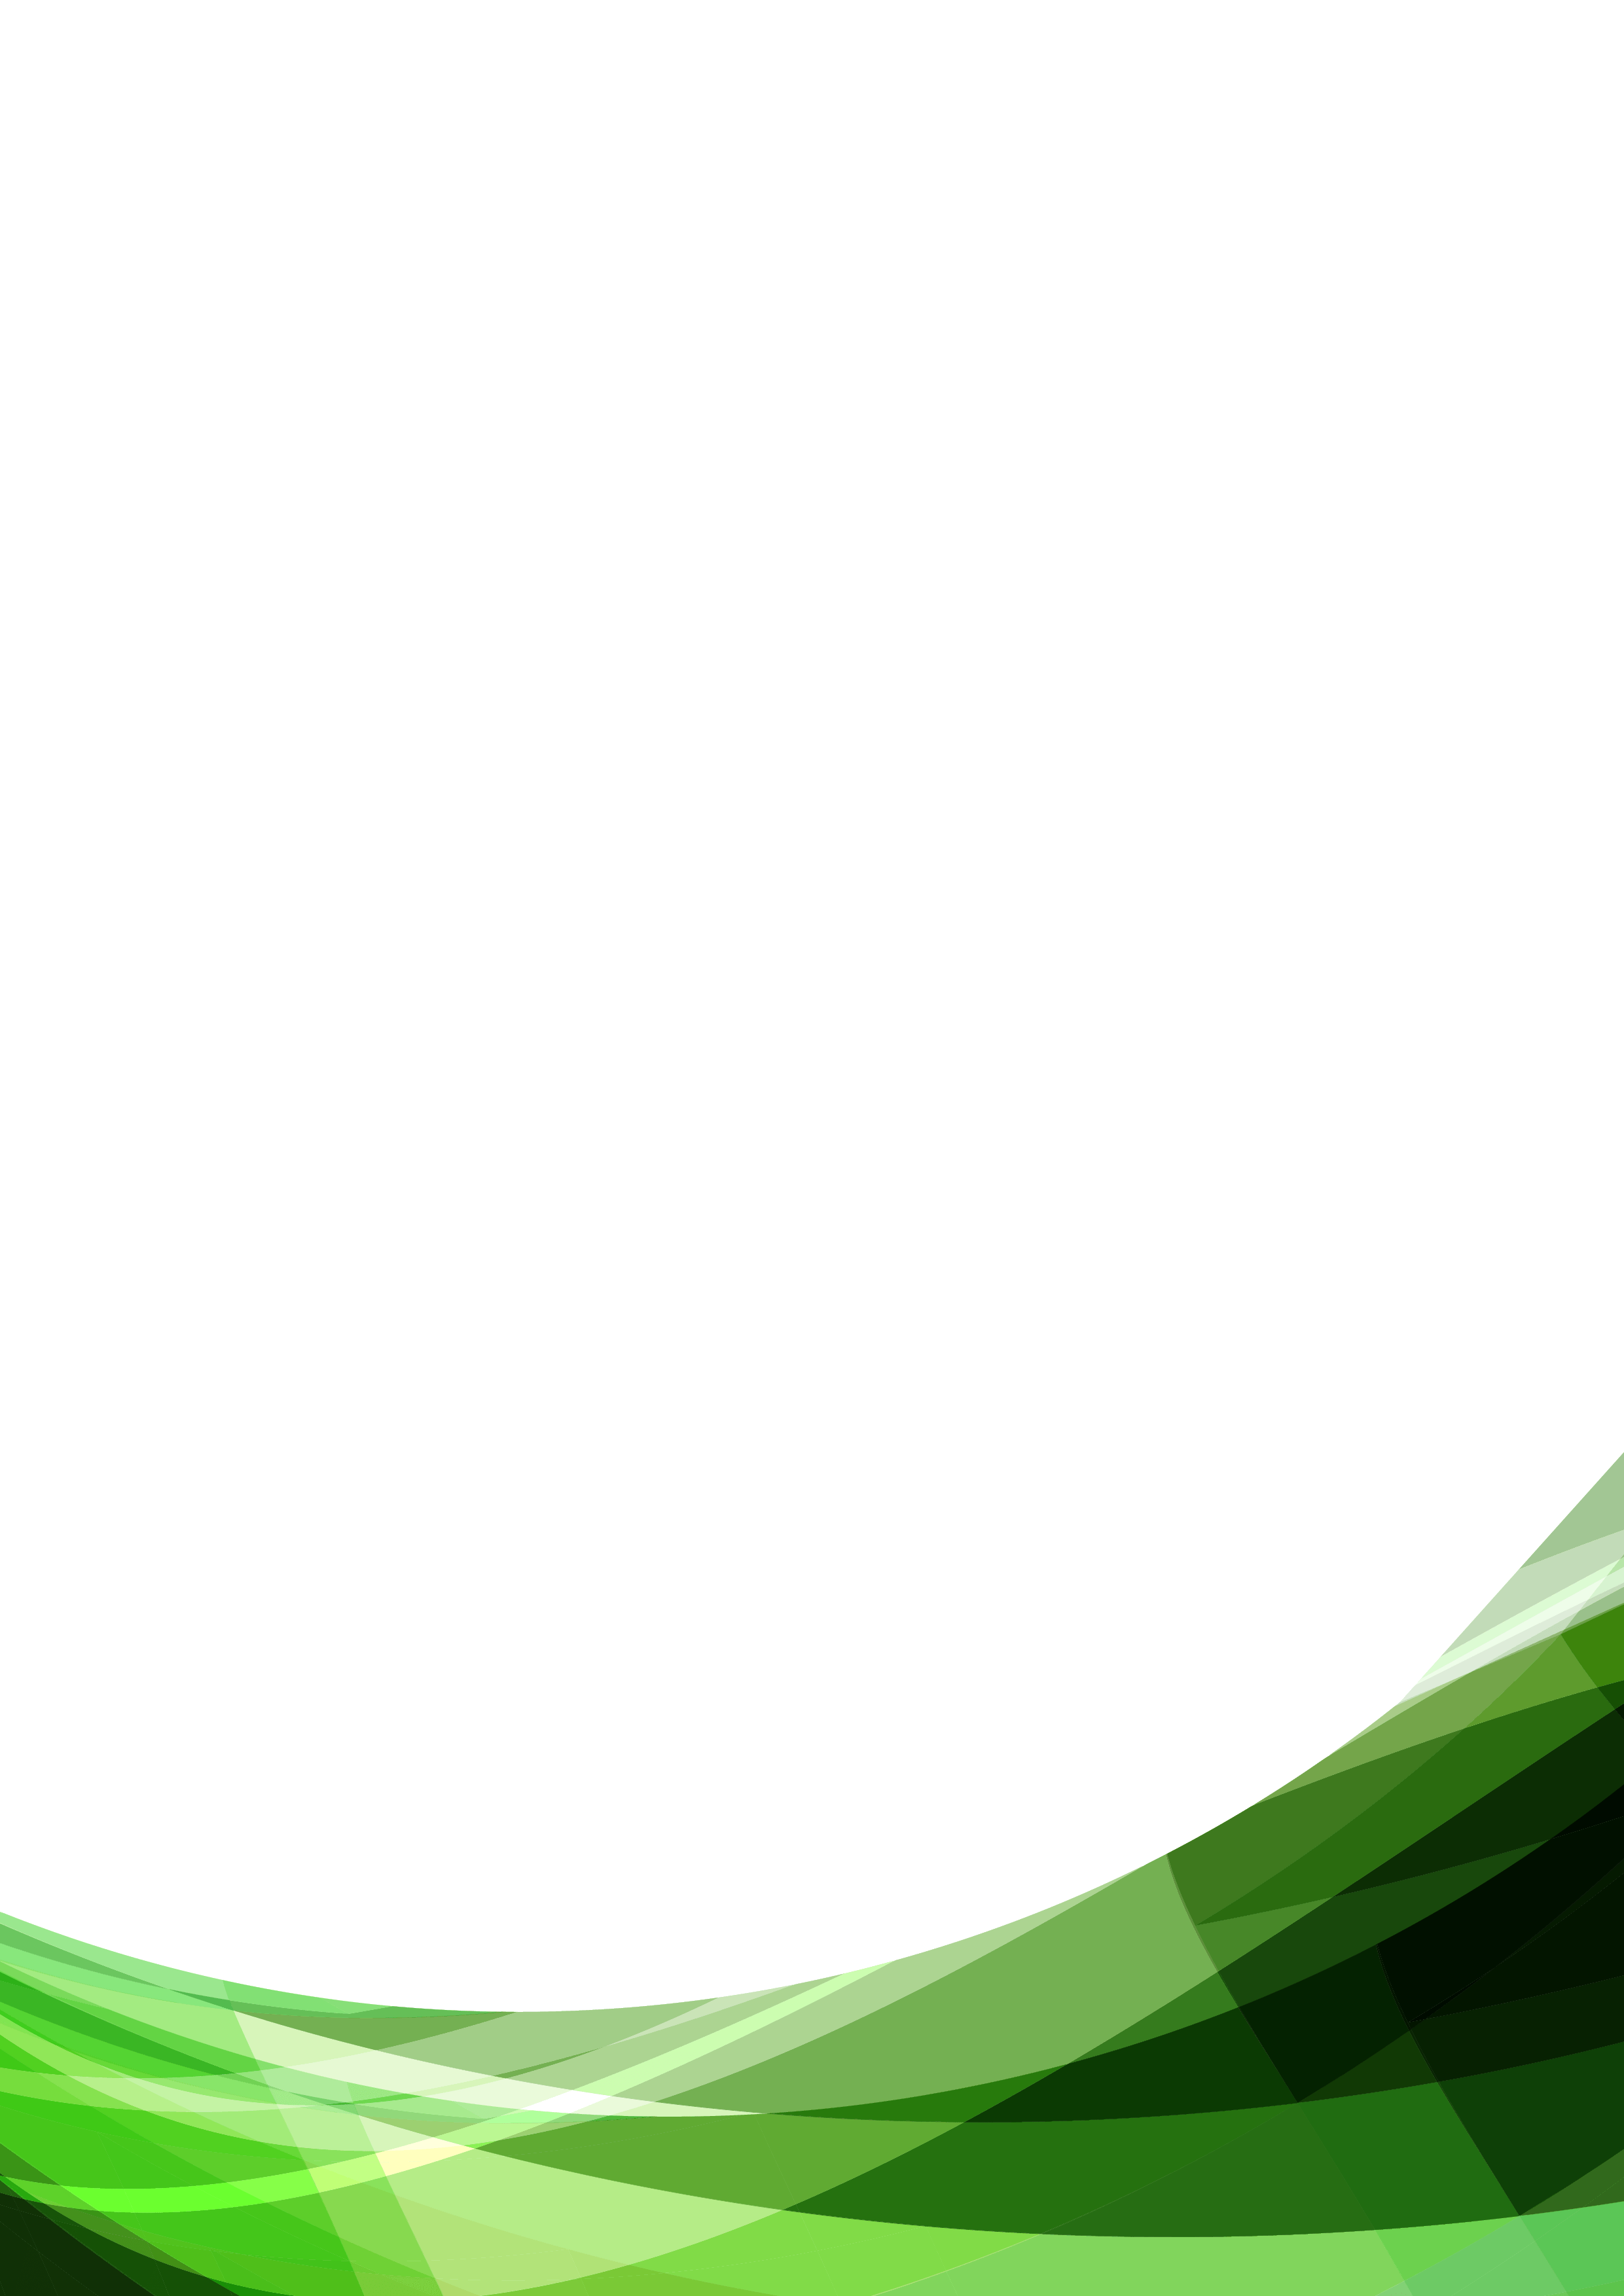 Green Background PNG Image Transparent Free Download